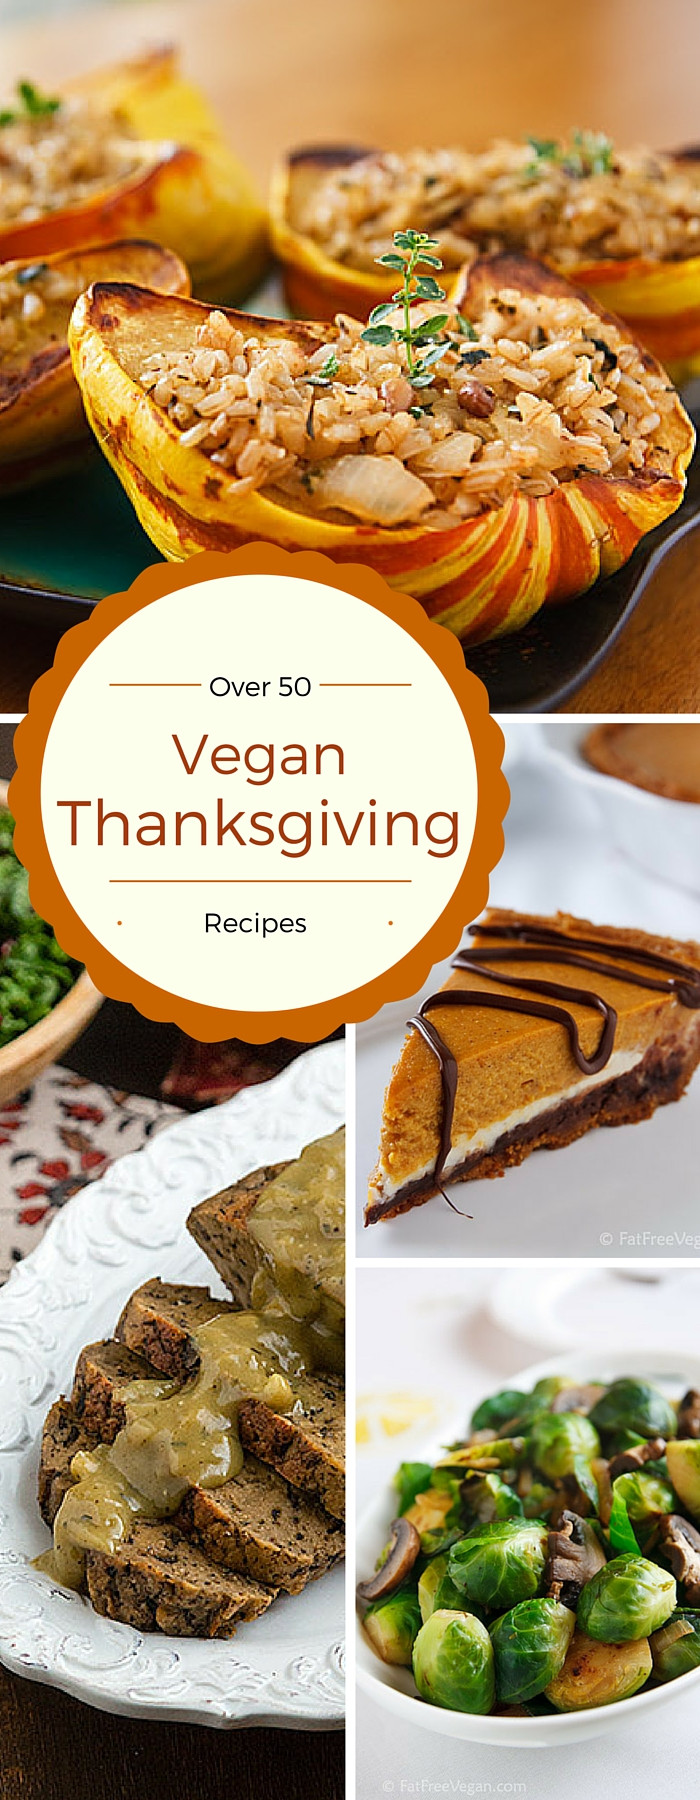 Vegan Recipes For Thanksgiving
 Thanksgiving Recipes Archives